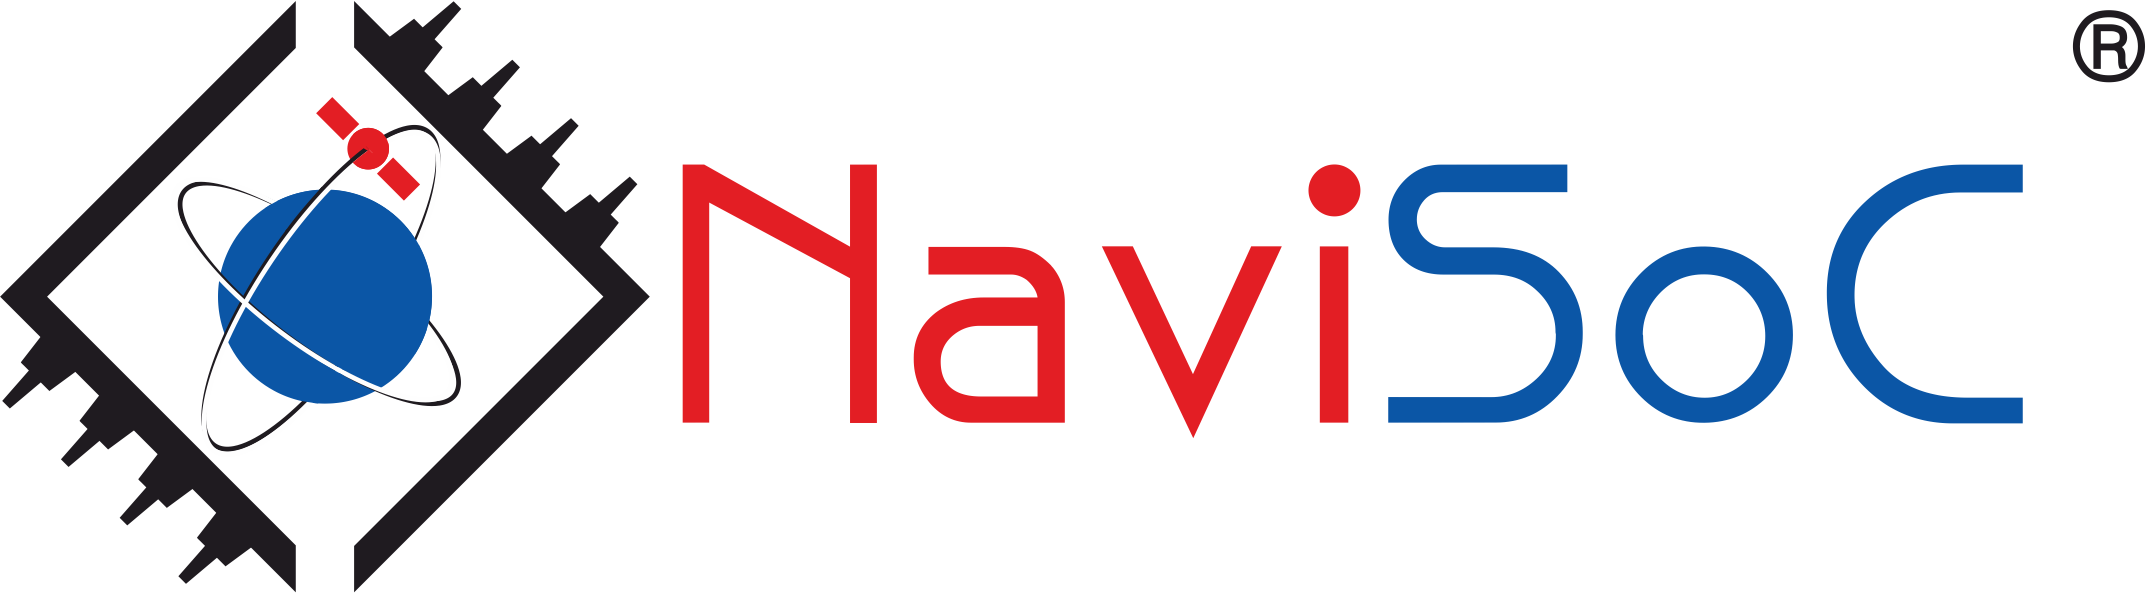 Navi So C Logo Design PNG image